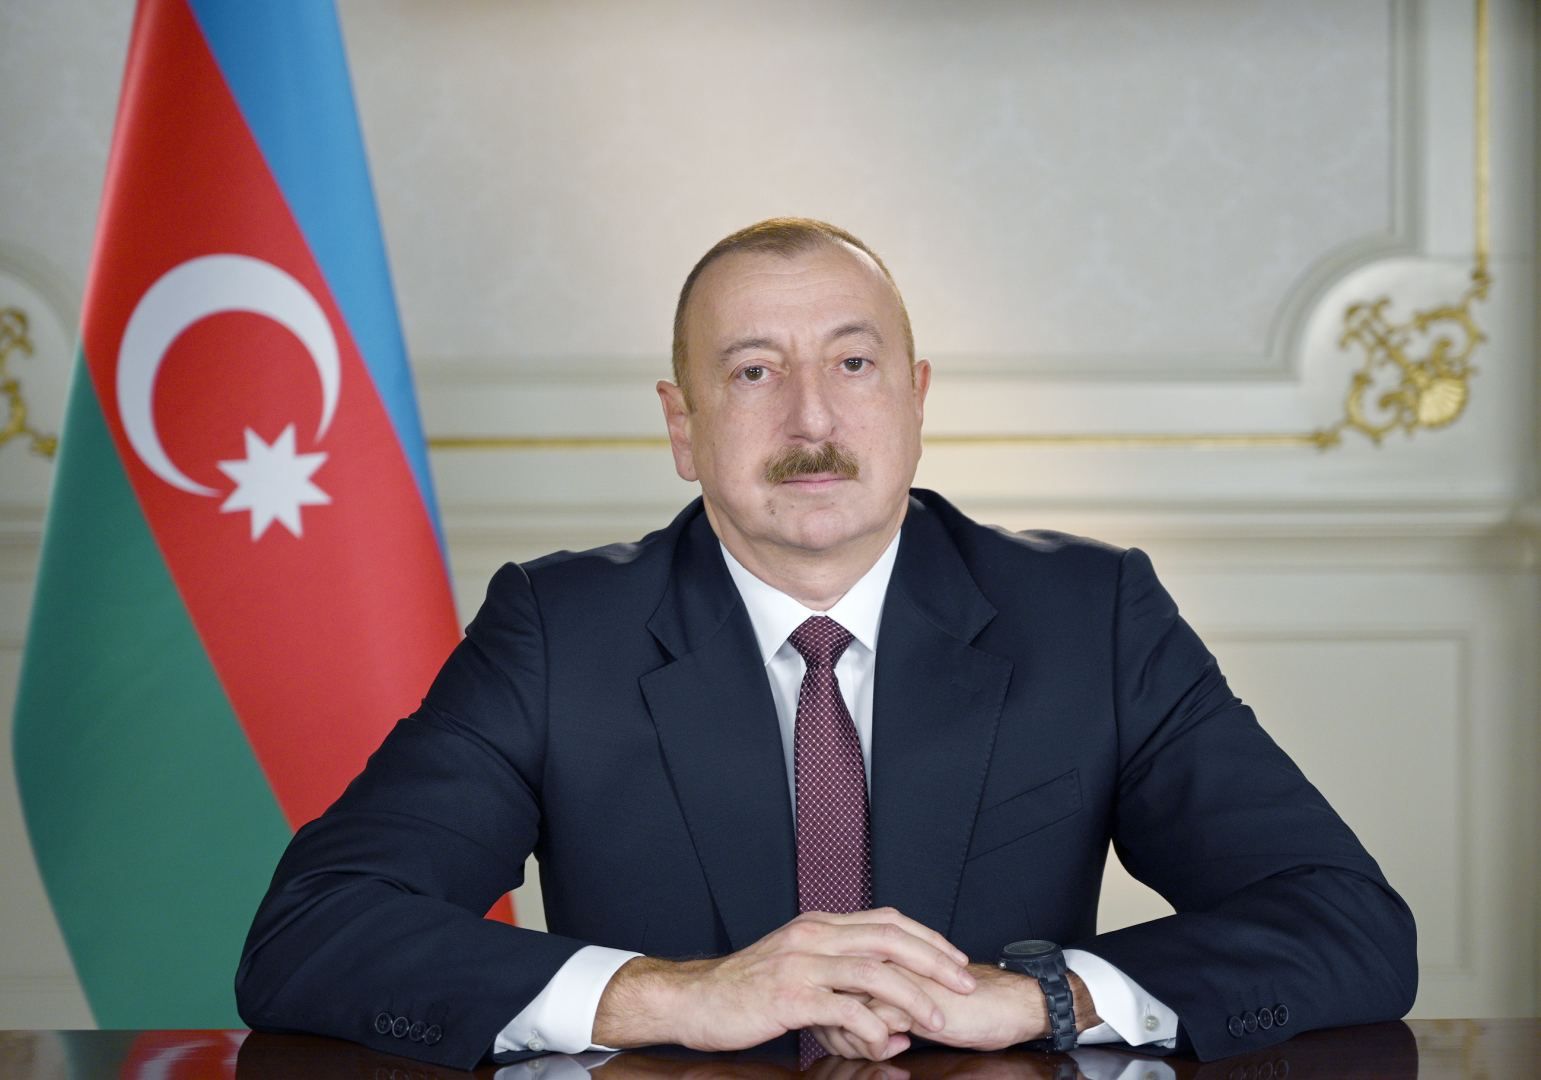 President of Czech Republic sends congratulatory letter to President Ilham Aliyev